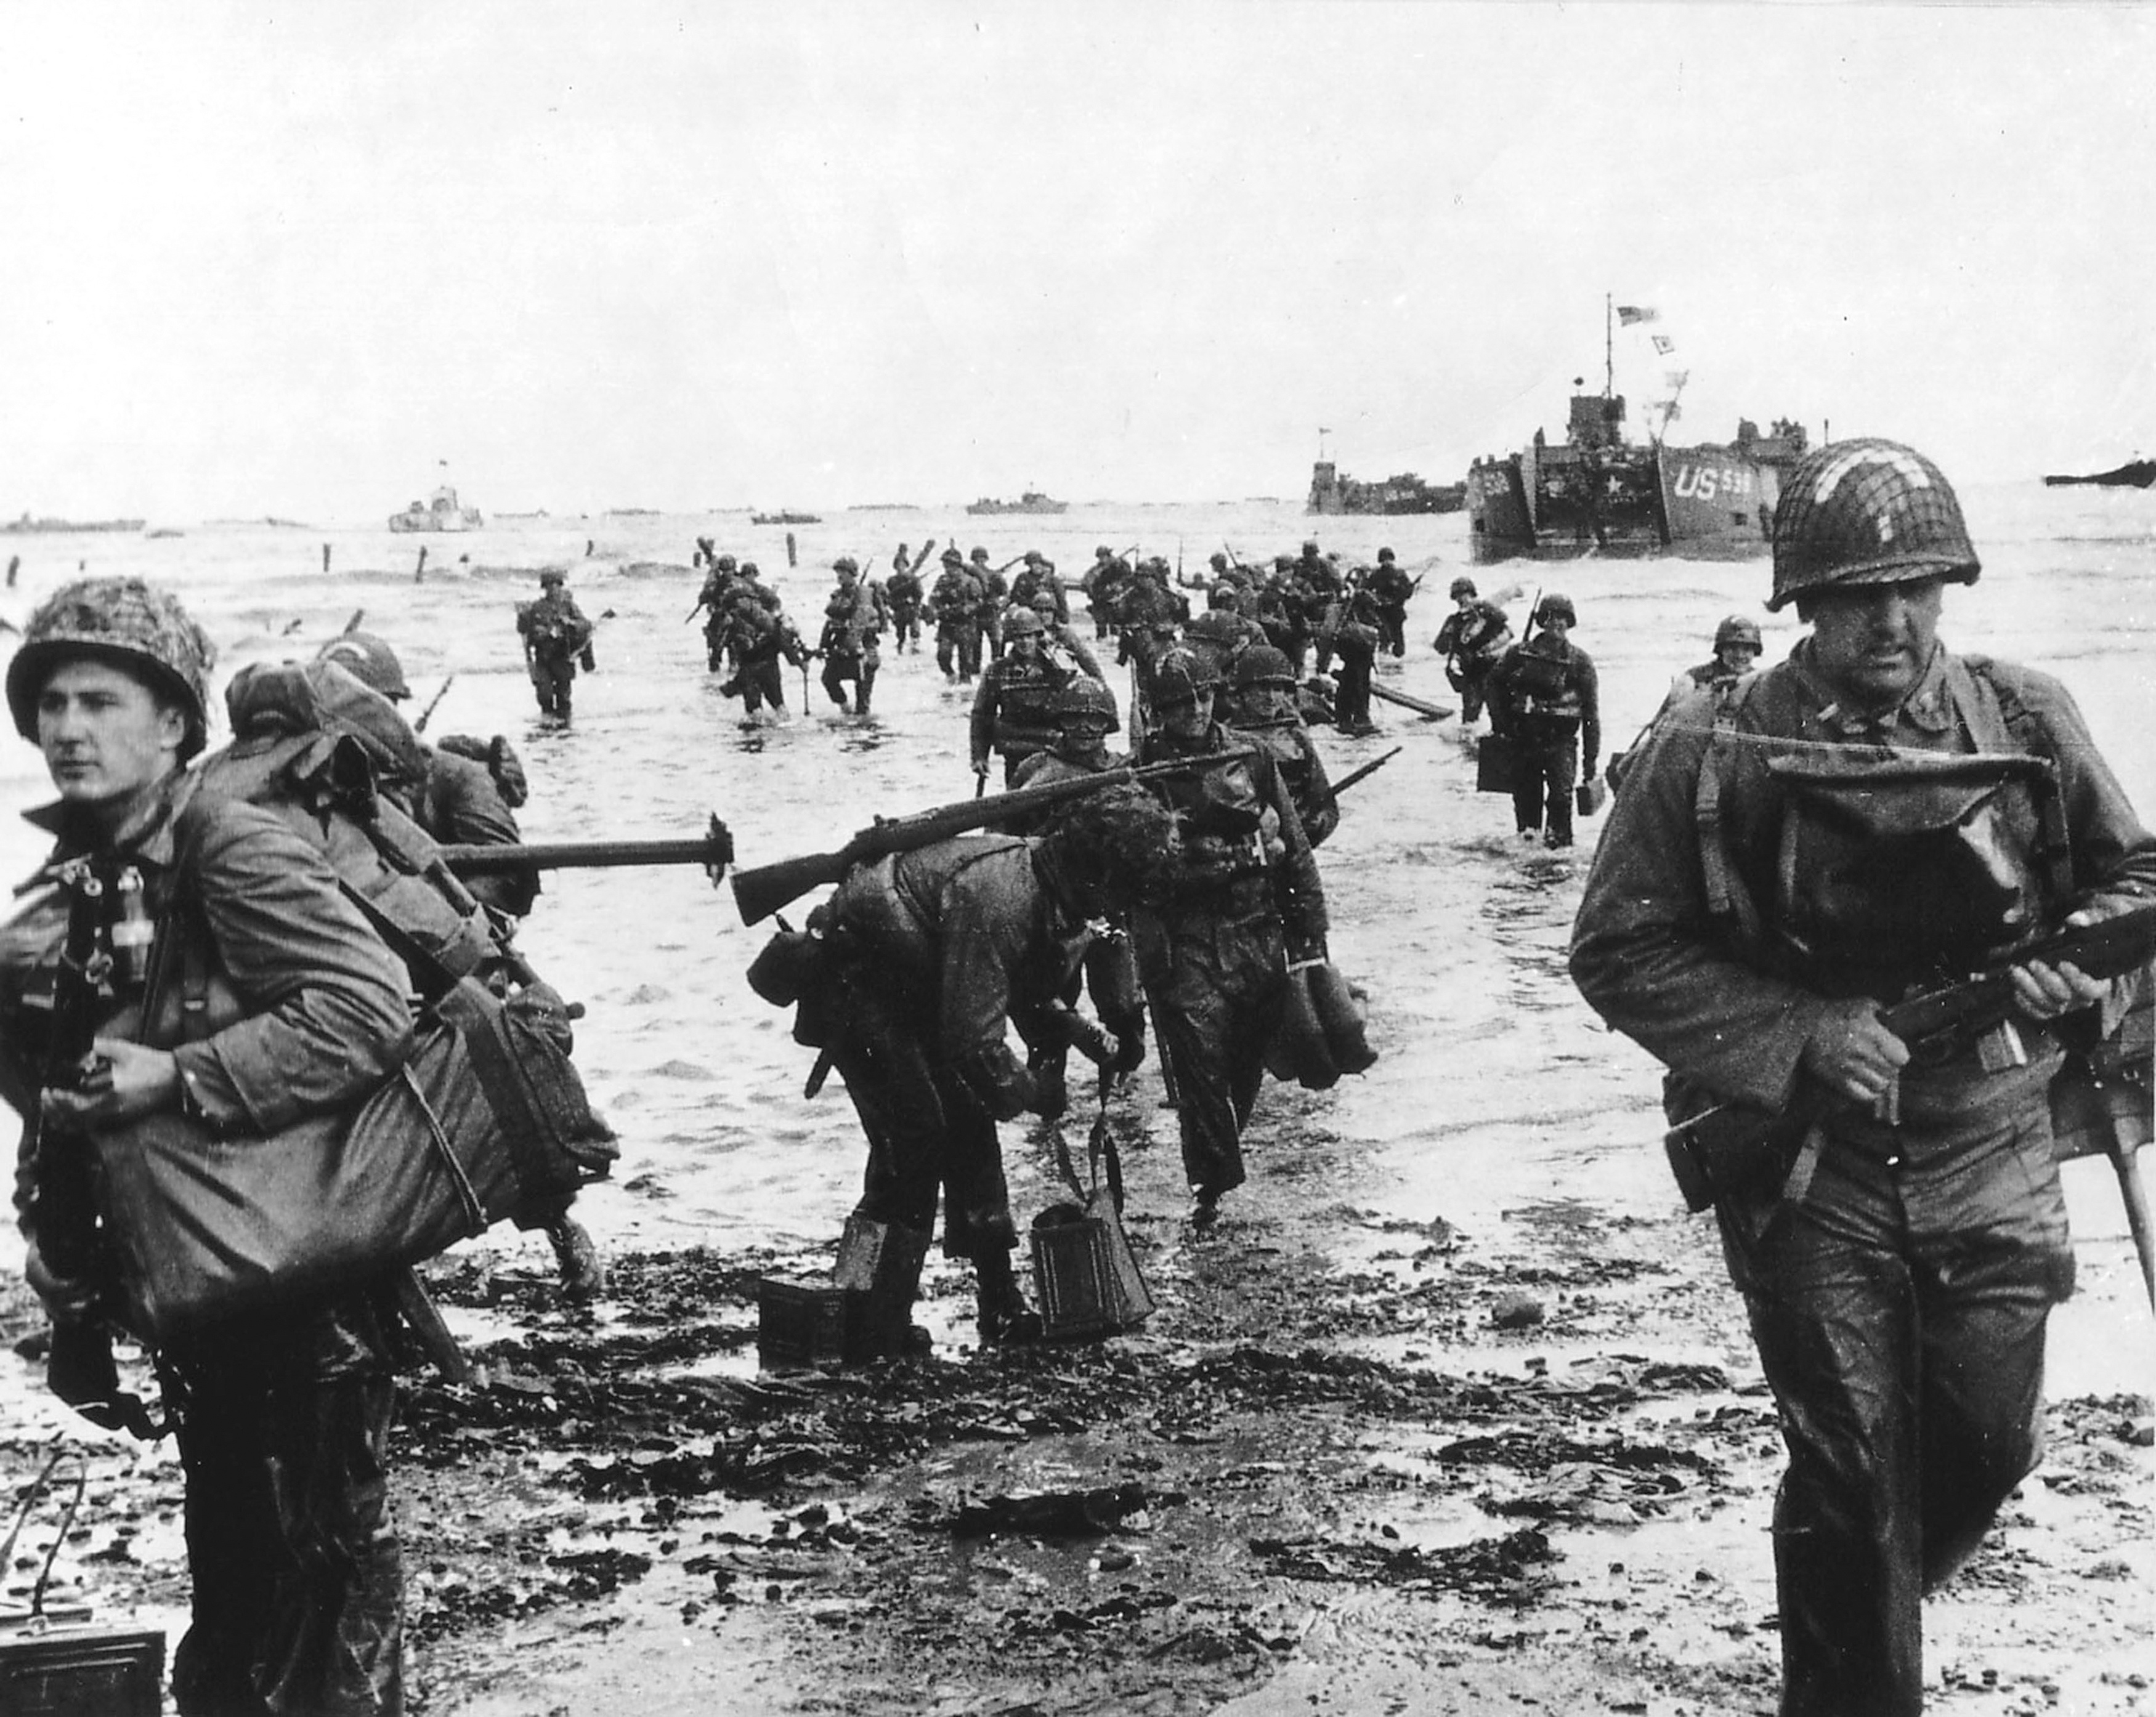 Handout photo of U.S. reinforcements landing on Omaha beach during the Normandy D-Day landings near Vierville sur Mer